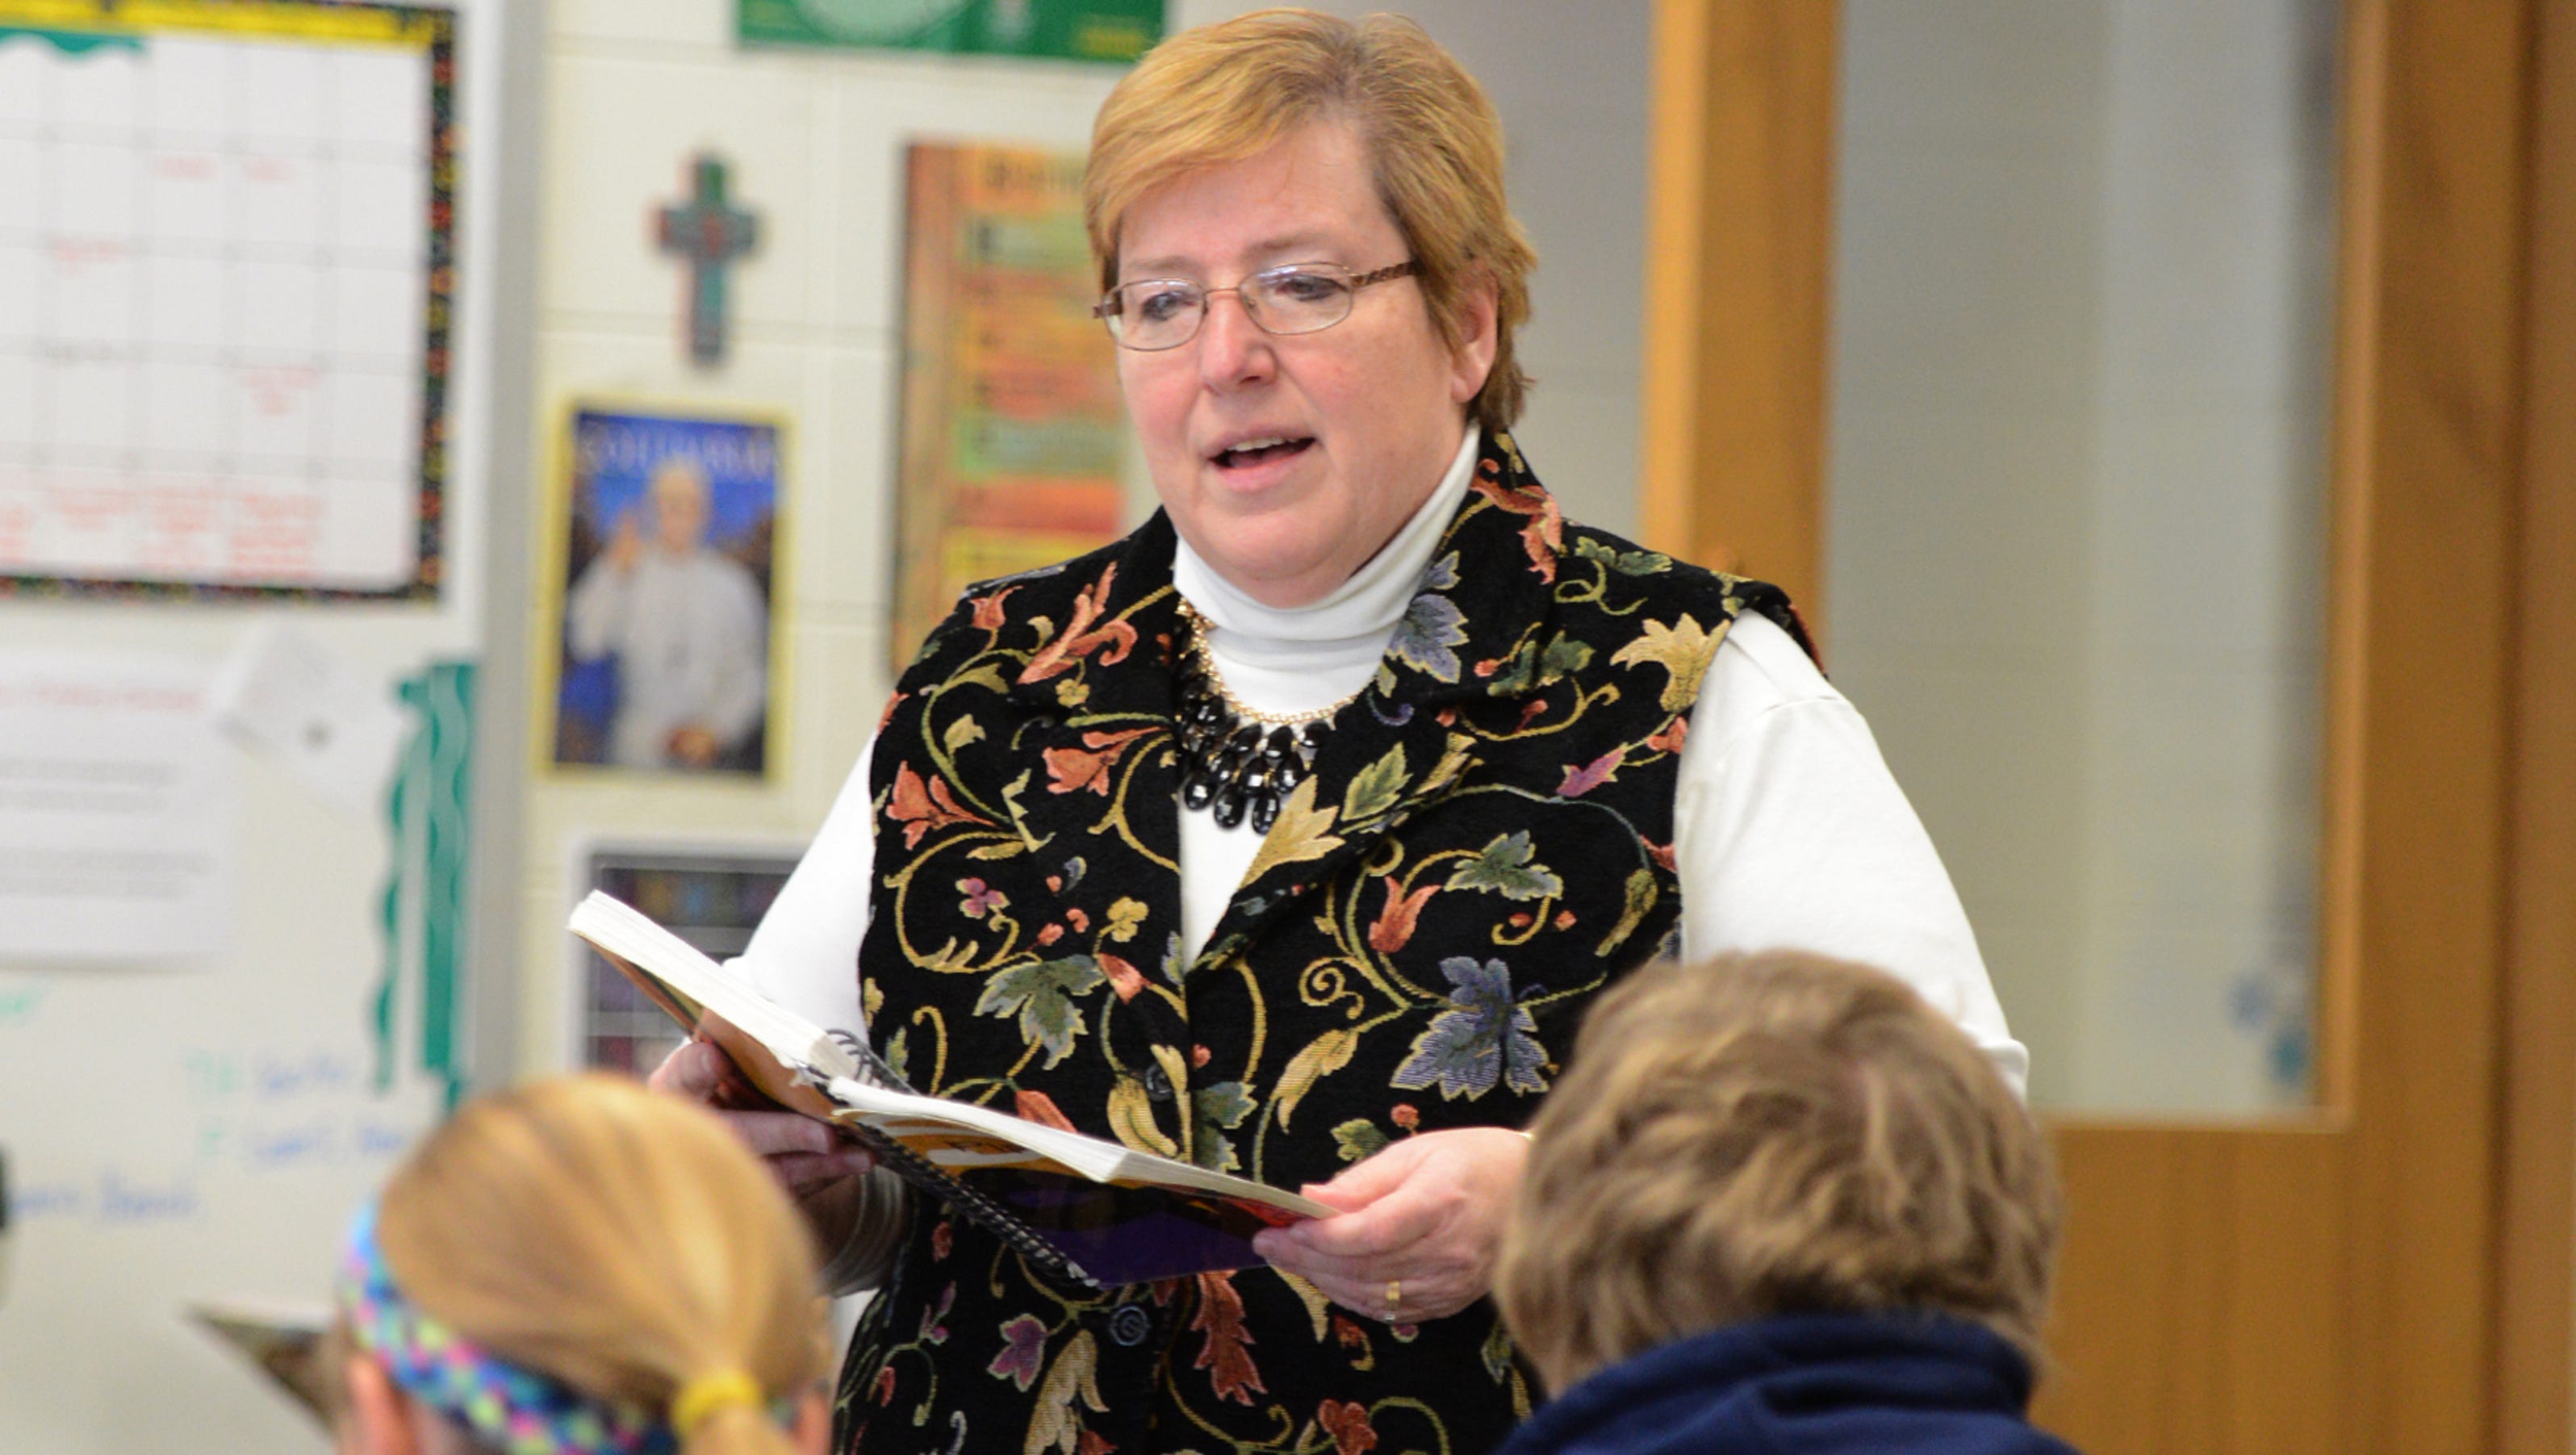 Catholic schools teachers respond to 'a calling'